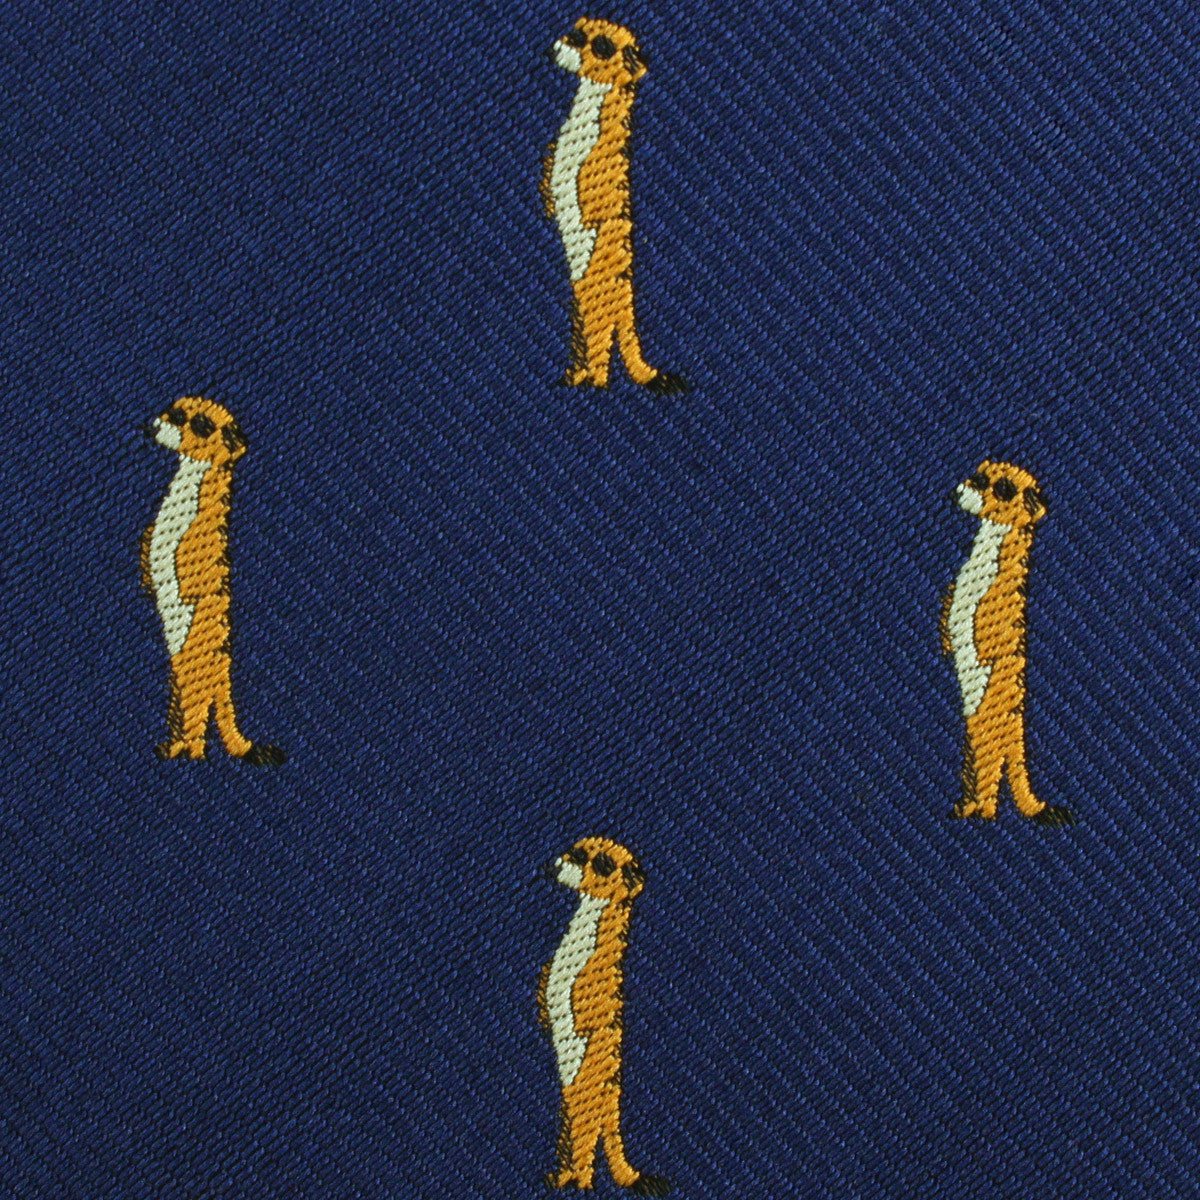 Meerkat Fabric Skinny Tie